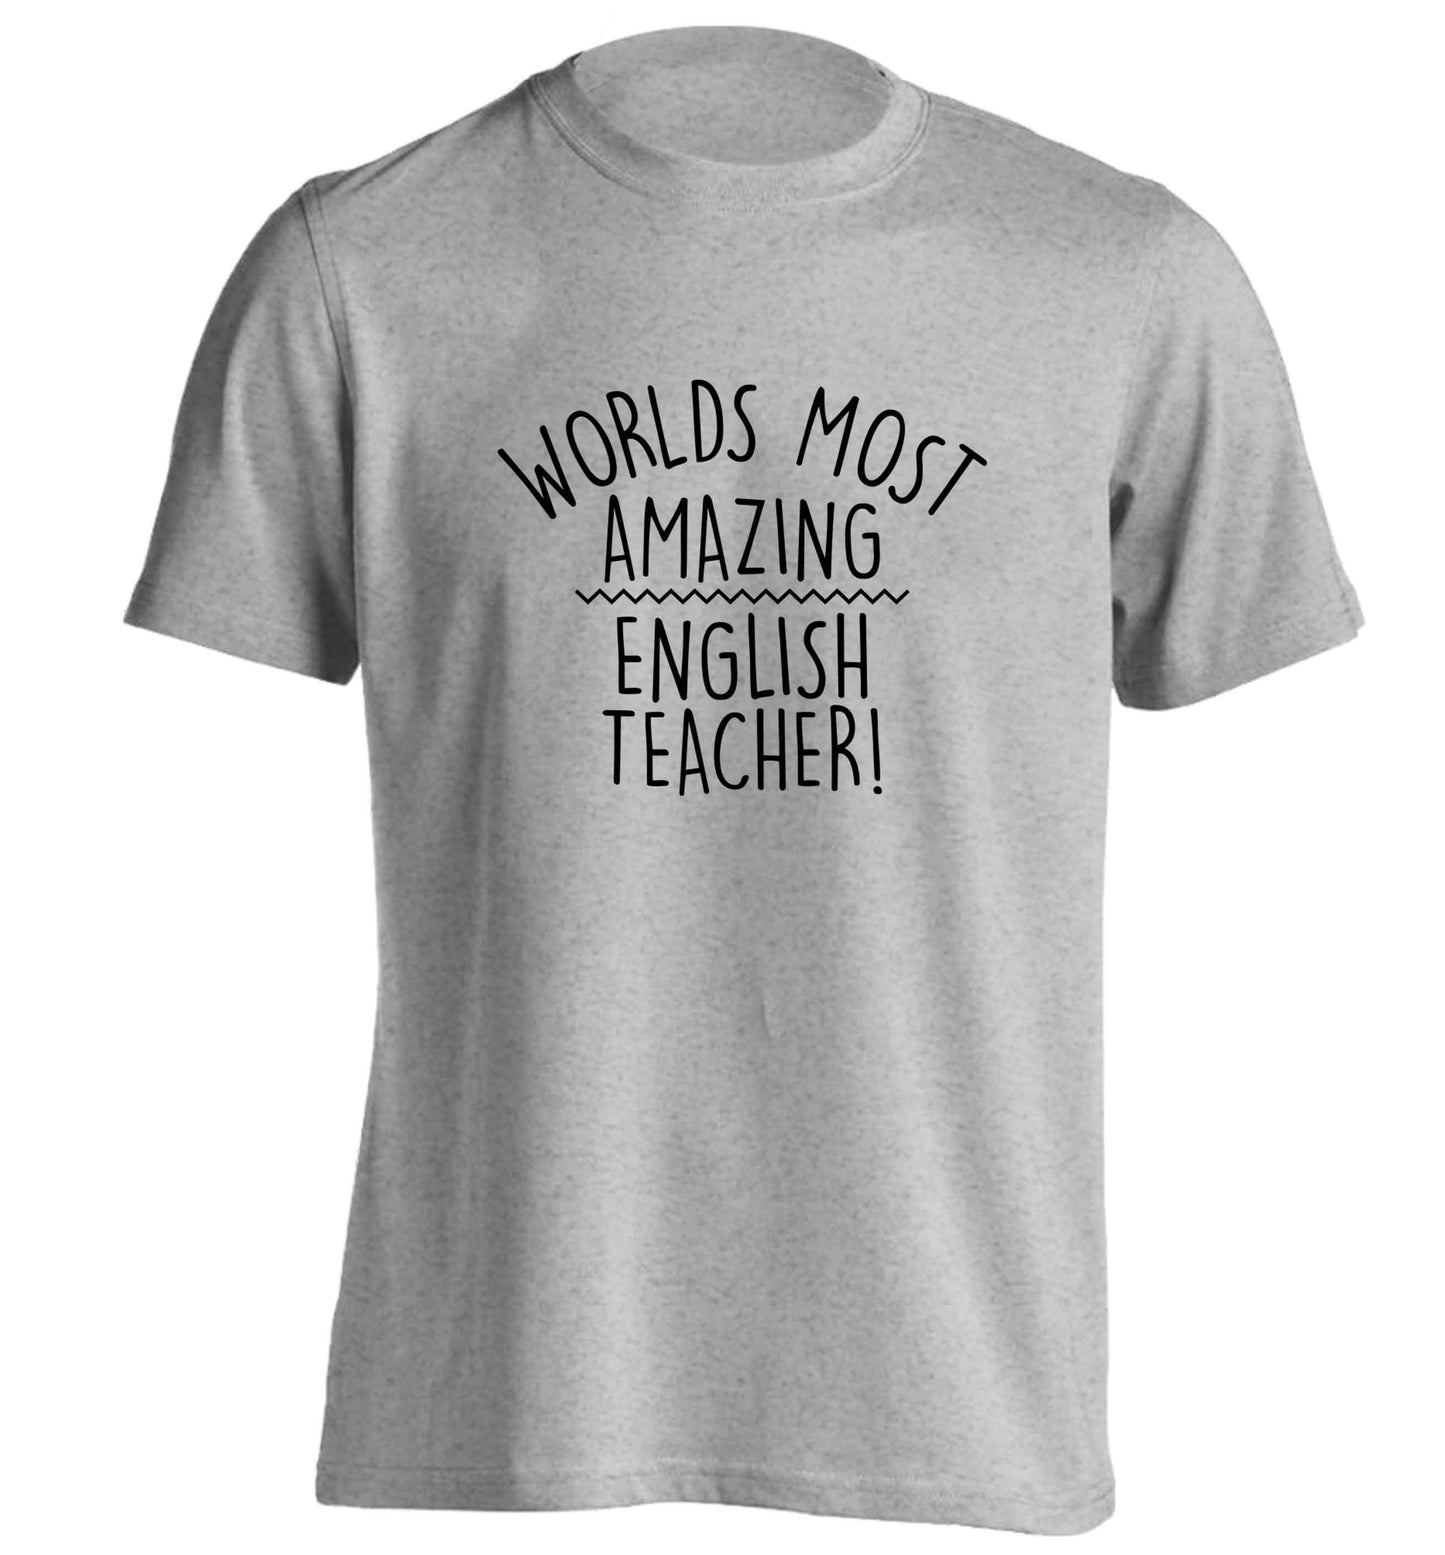 Worlds most amazing English teacher adults unisex grey Tshirt 2XL